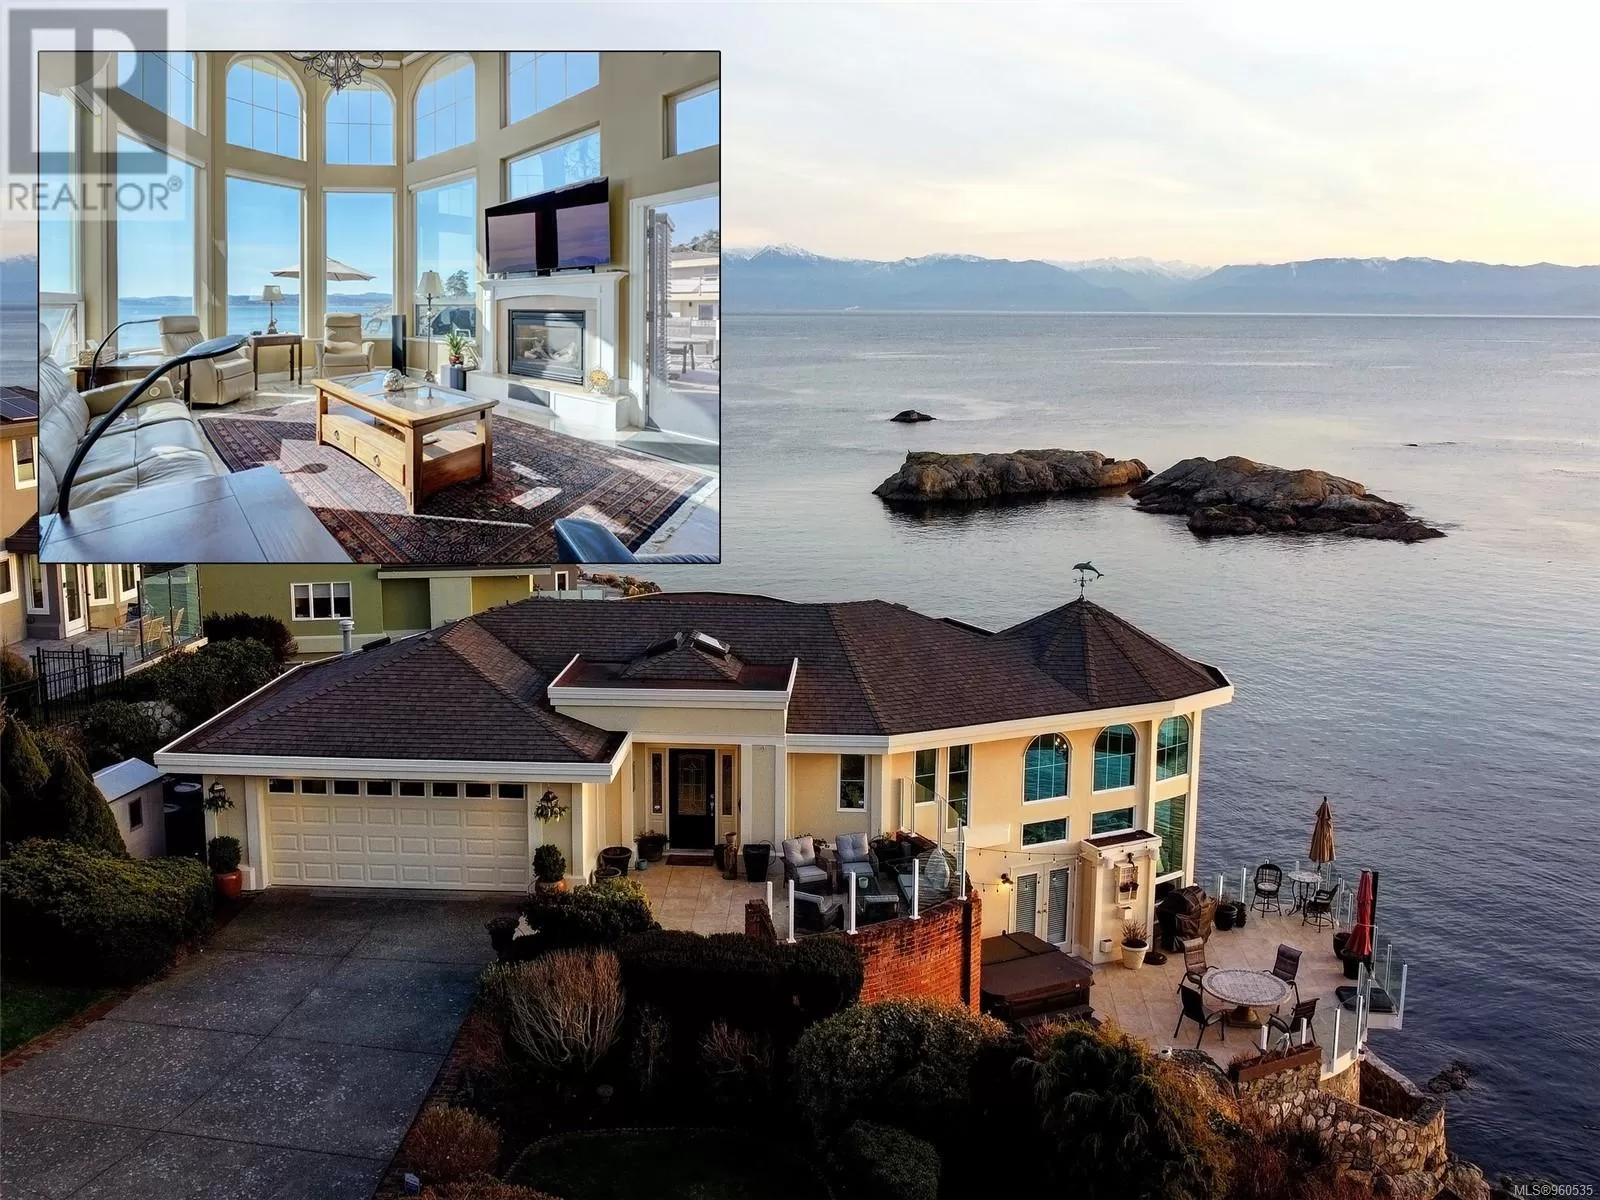 House for rent: 10 300 Plaskett Pl, Esquimalt, British Columbia V9A 6G4